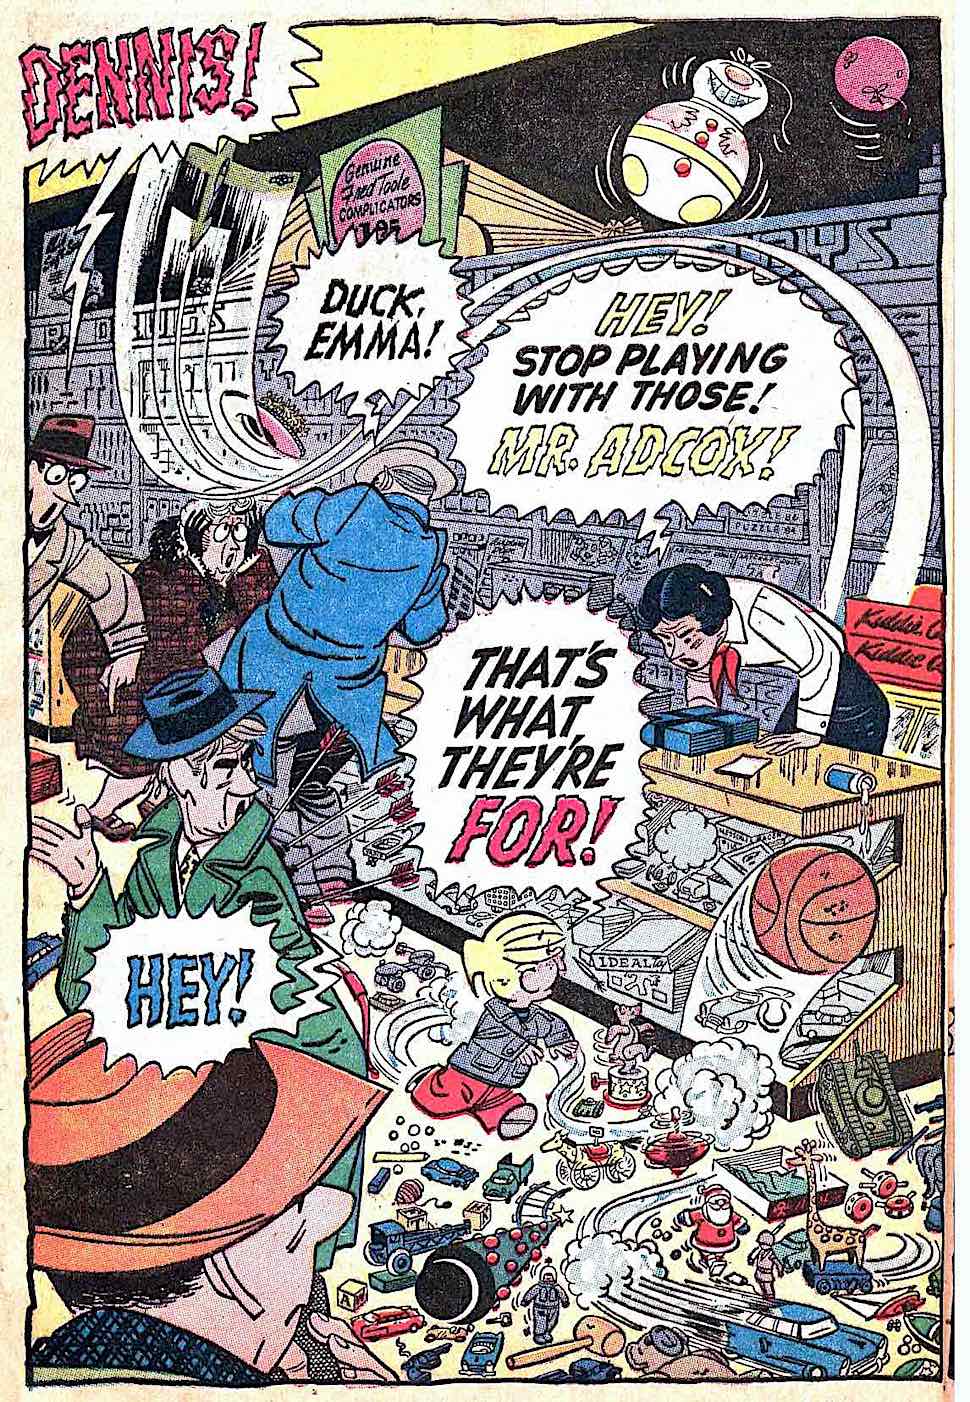 Dennis The Menace by Hank Ketcham 1956, Dennis runs wild in a toy store